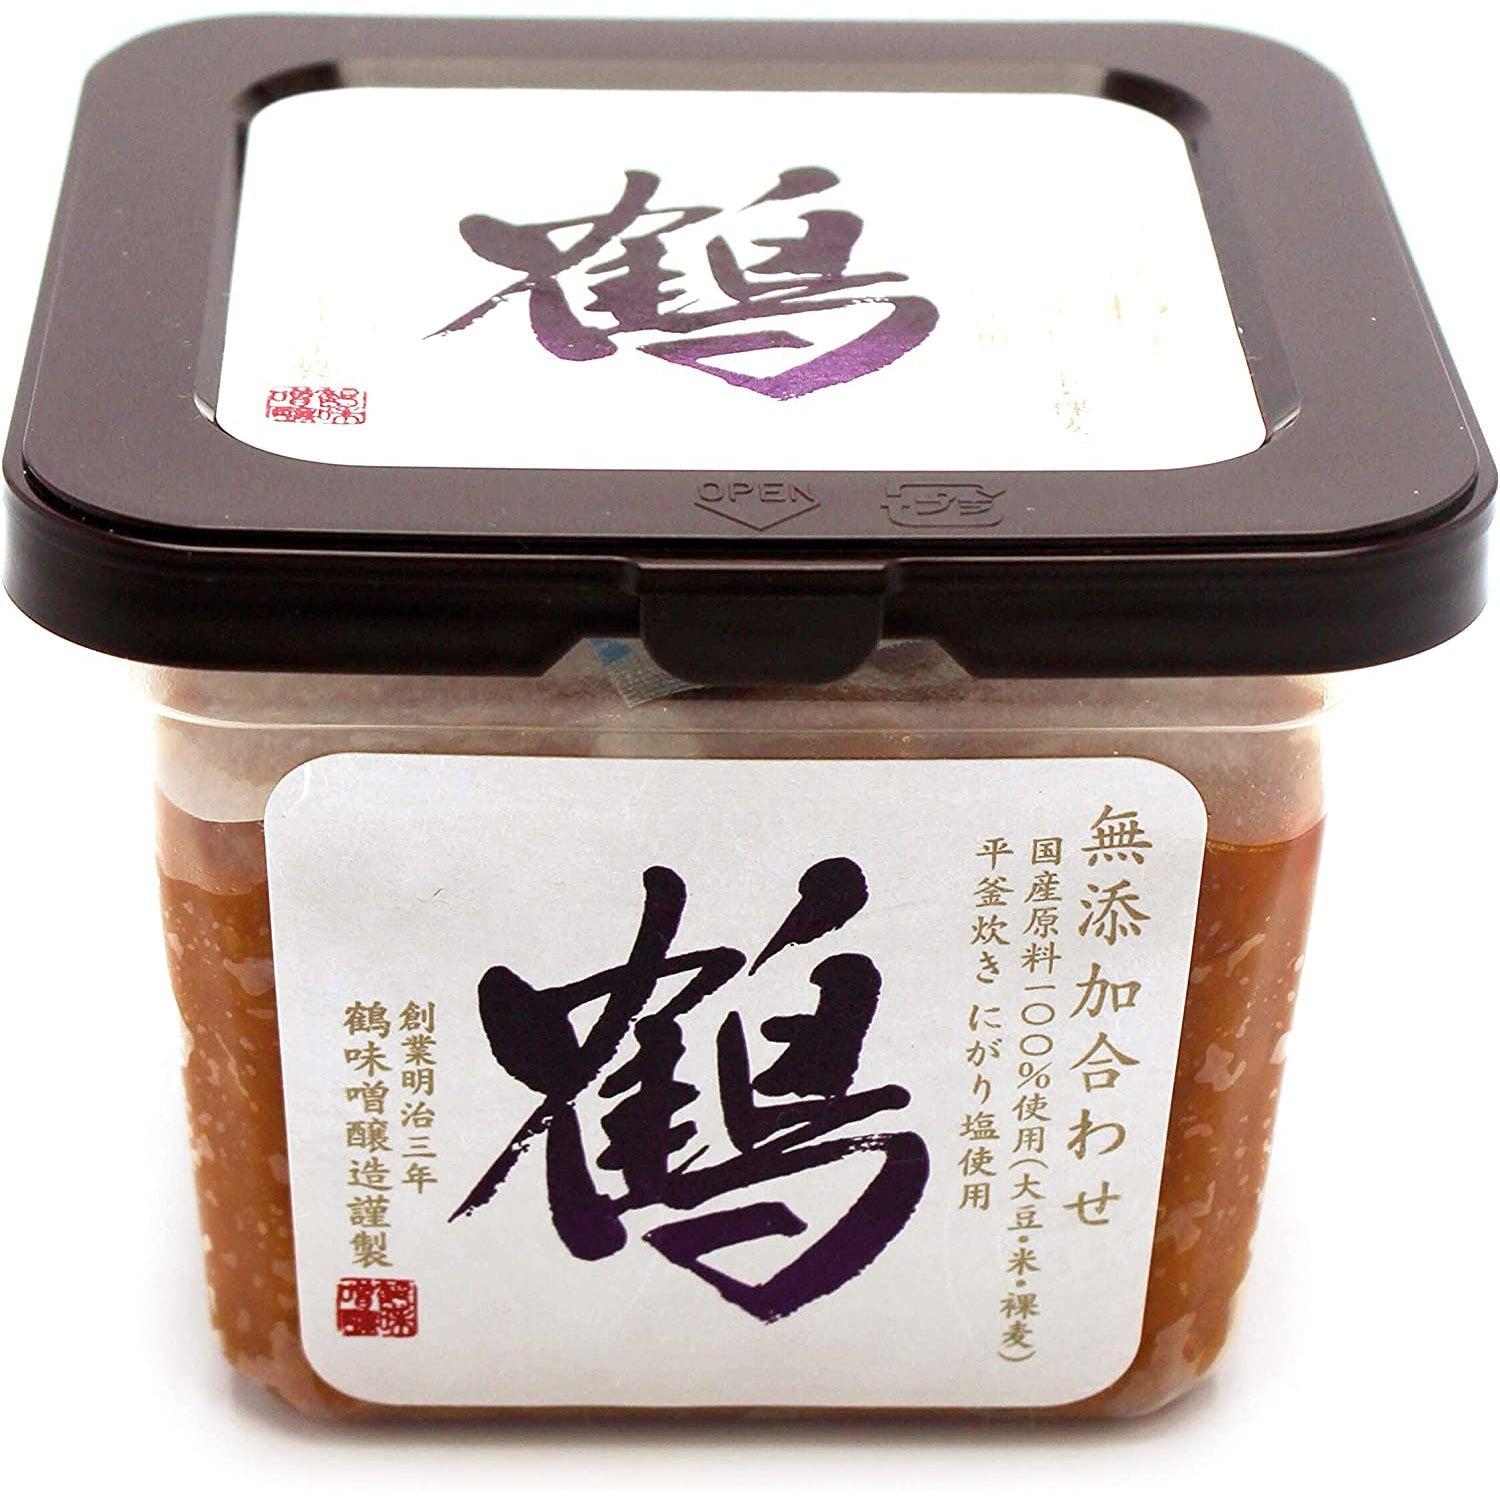 Tsurumiso Jyozo Namikura Additive Free Awase Miso (Mixed Miso Paste) 500g